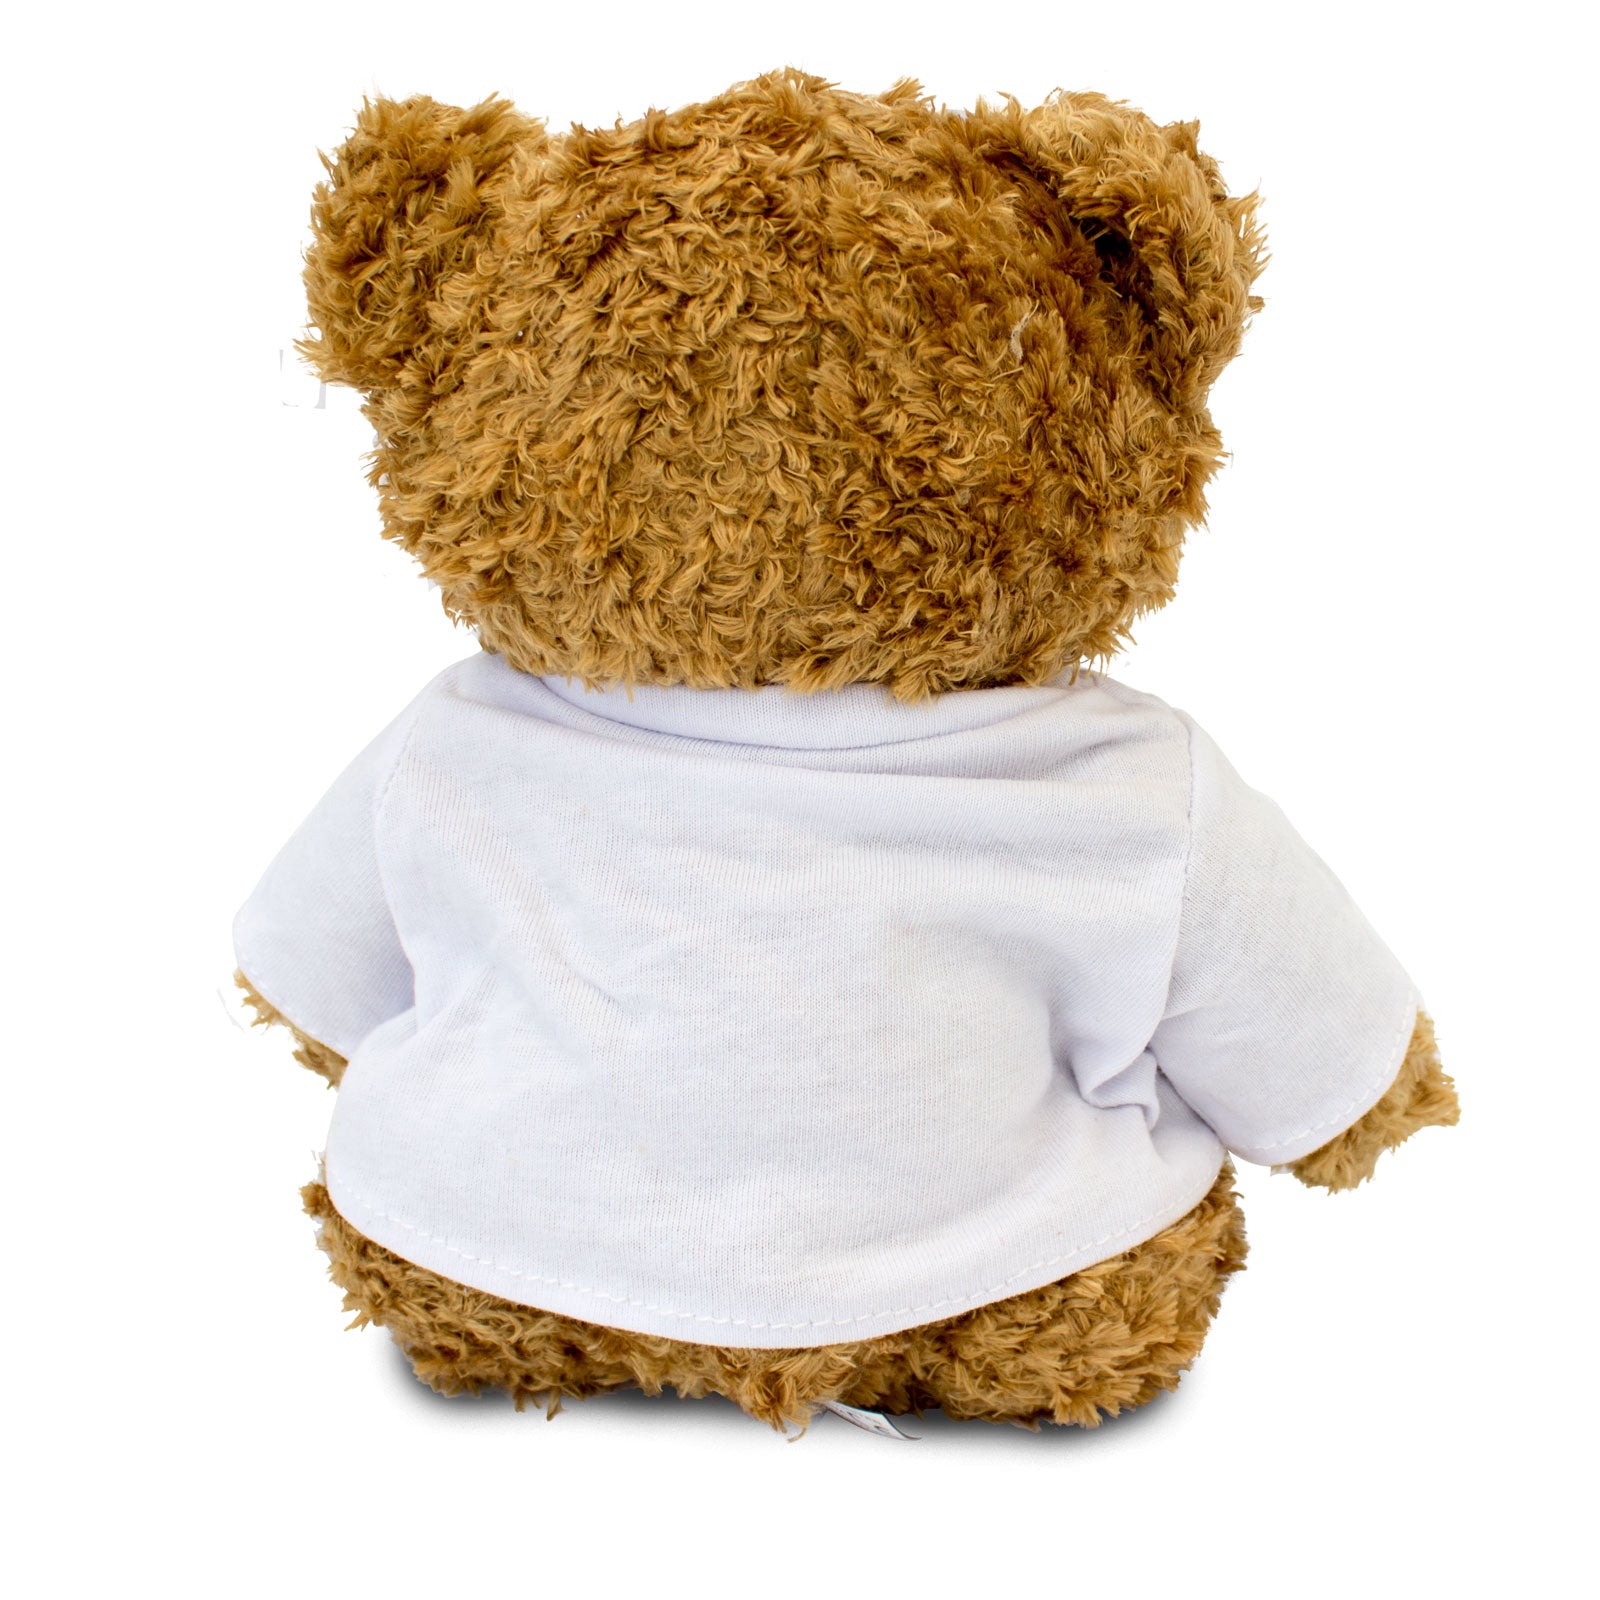 Get Well Soon Hunter - Teddy Bear